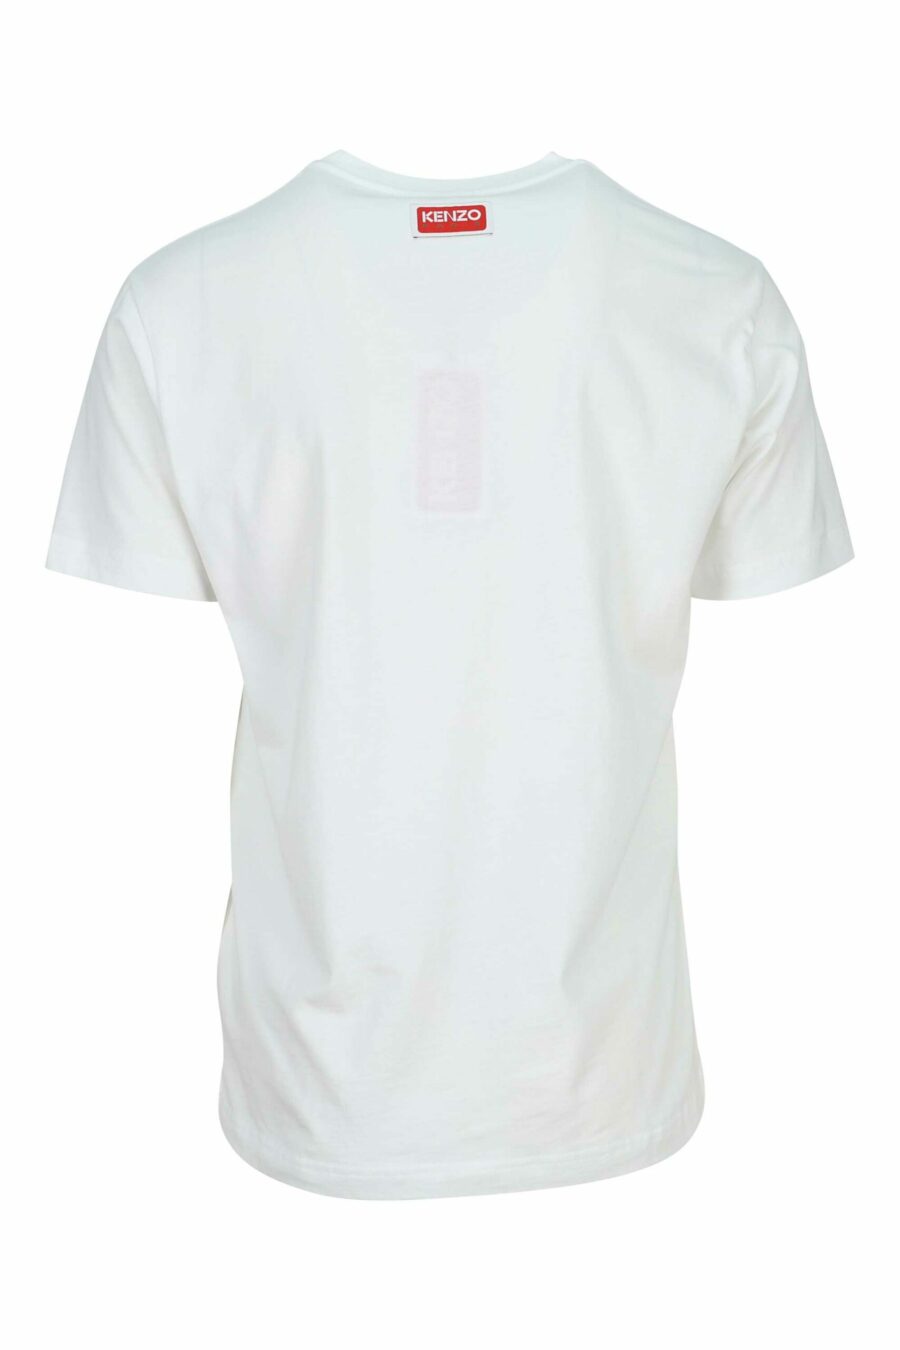 Camiseta blanca con minilogo "kenzo elephant" multicolor - 3612230625297 1 scaled